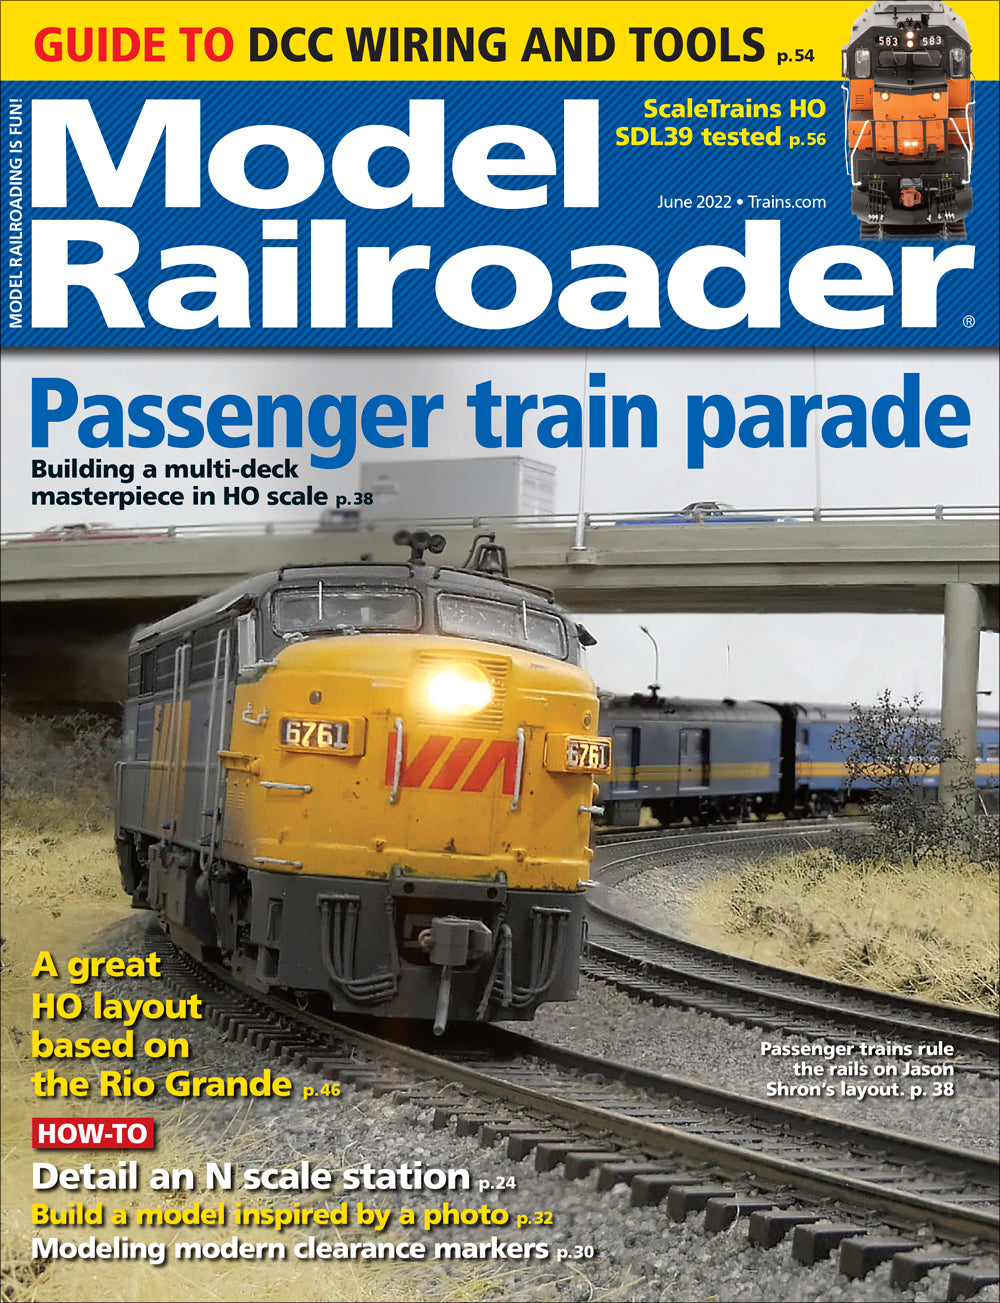 Model Railroader - Magazine - Vol. 89 - Issue 06 - June 2022